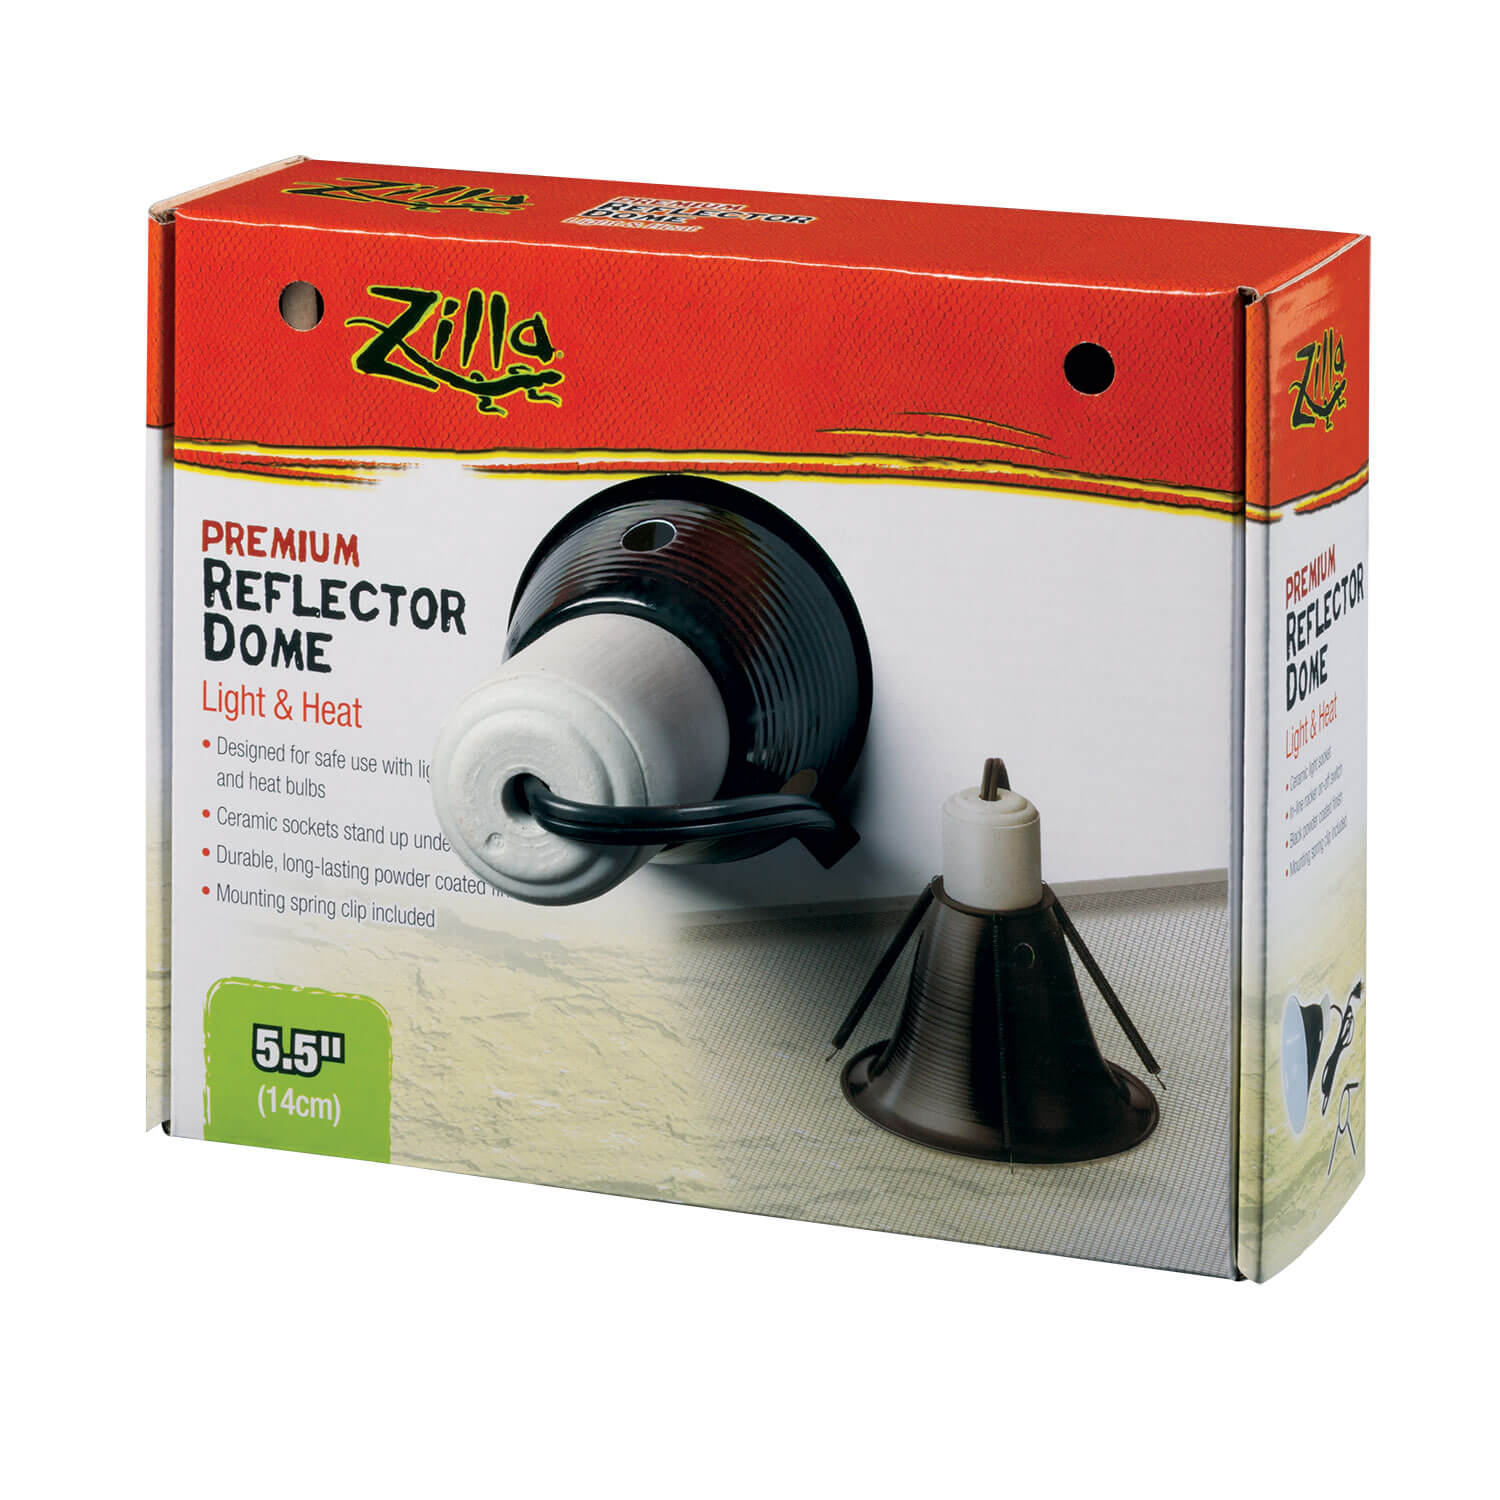 Zilla Light and Heat Premium Reflector Dome